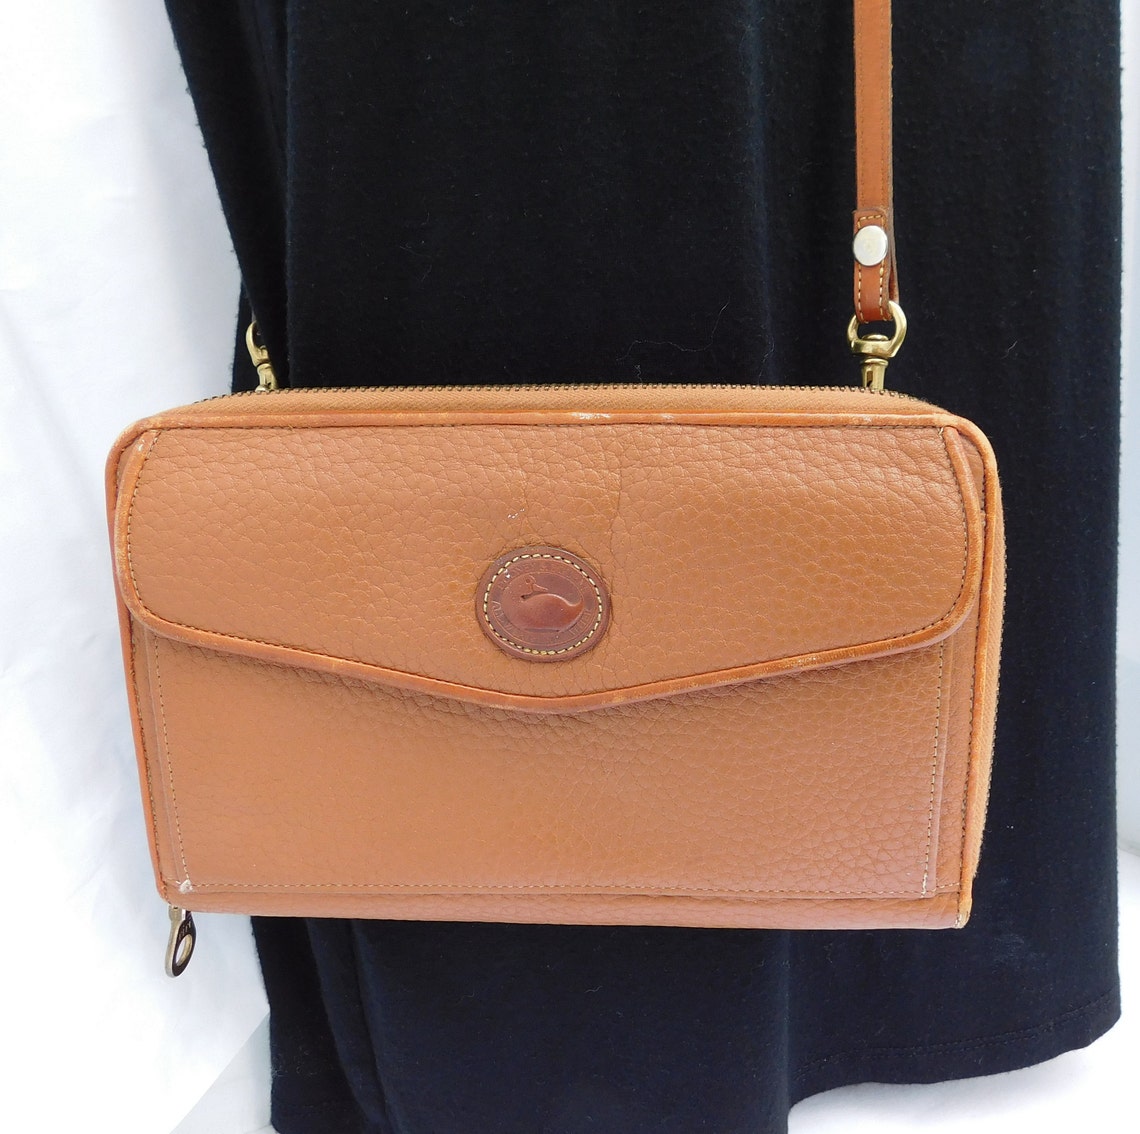 Dooney & Bourke Convertible Tan Leather Fanny Pack Waist Belt | Etsy